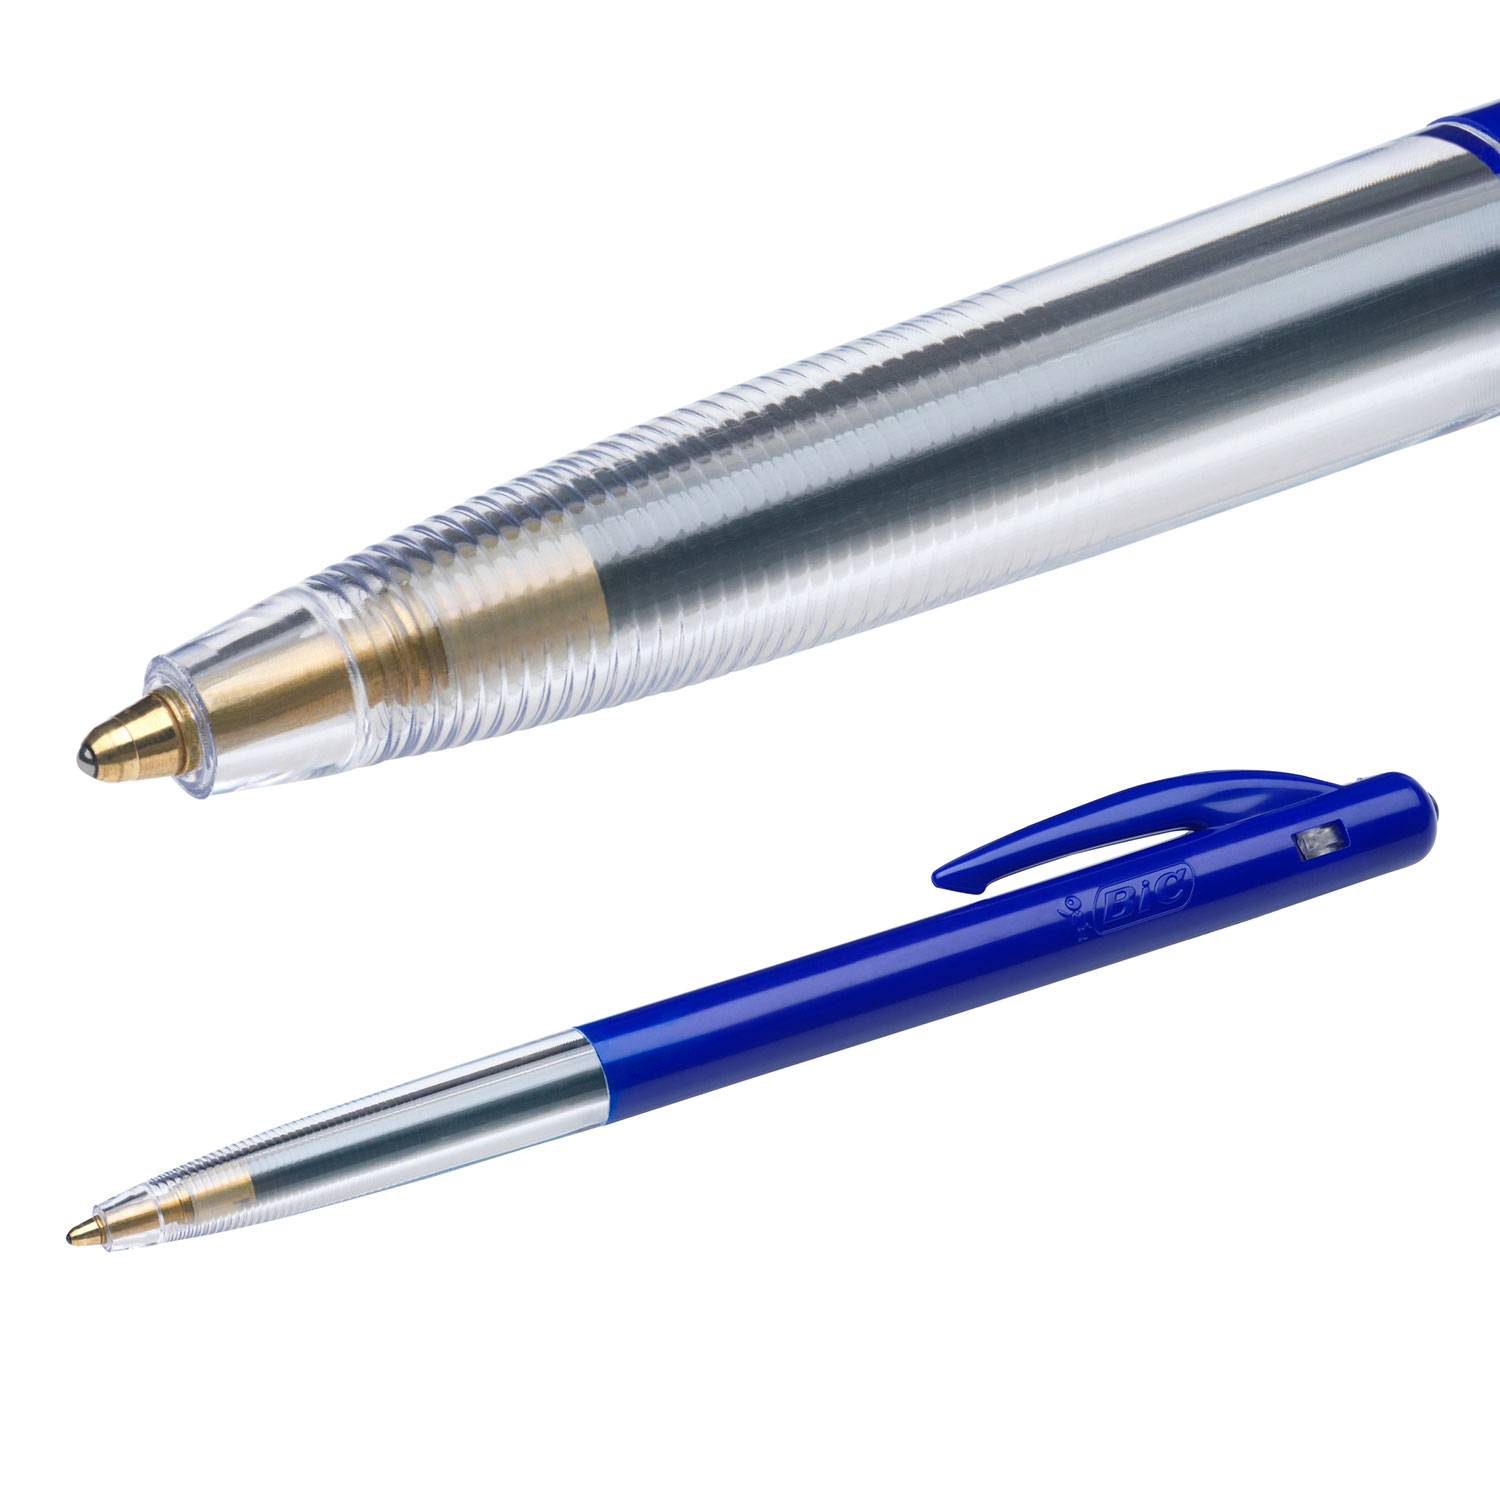 Bic M10 Medium Clic Pens - Blue (Pack of 10)